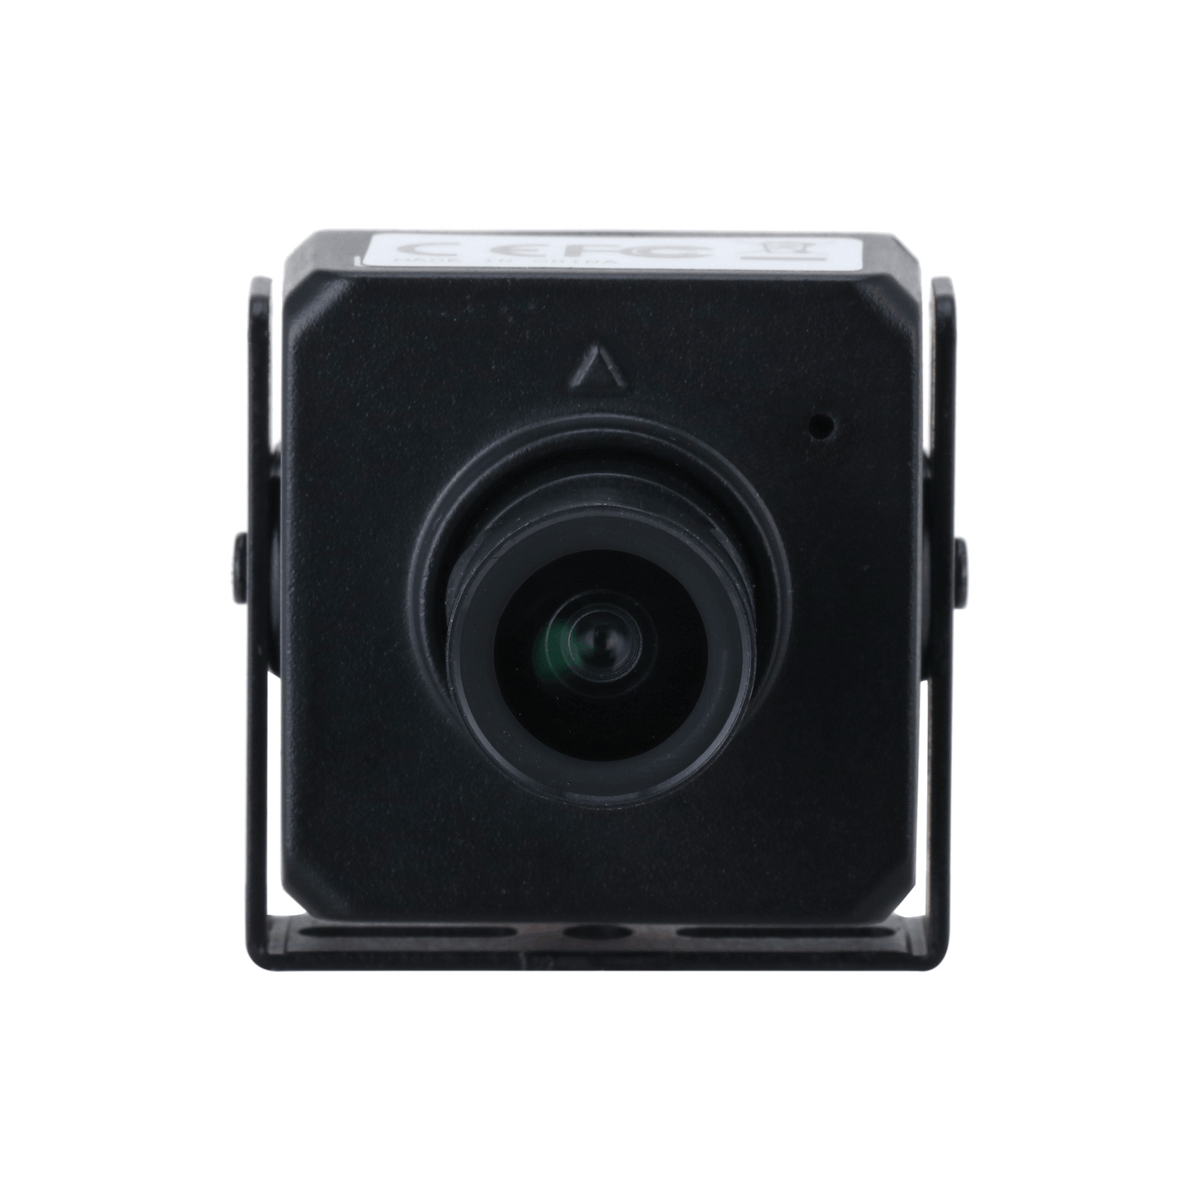 DAHUA IPC-HUM4431S-L5 4MP Fixed-focal Pinhole Network Camera